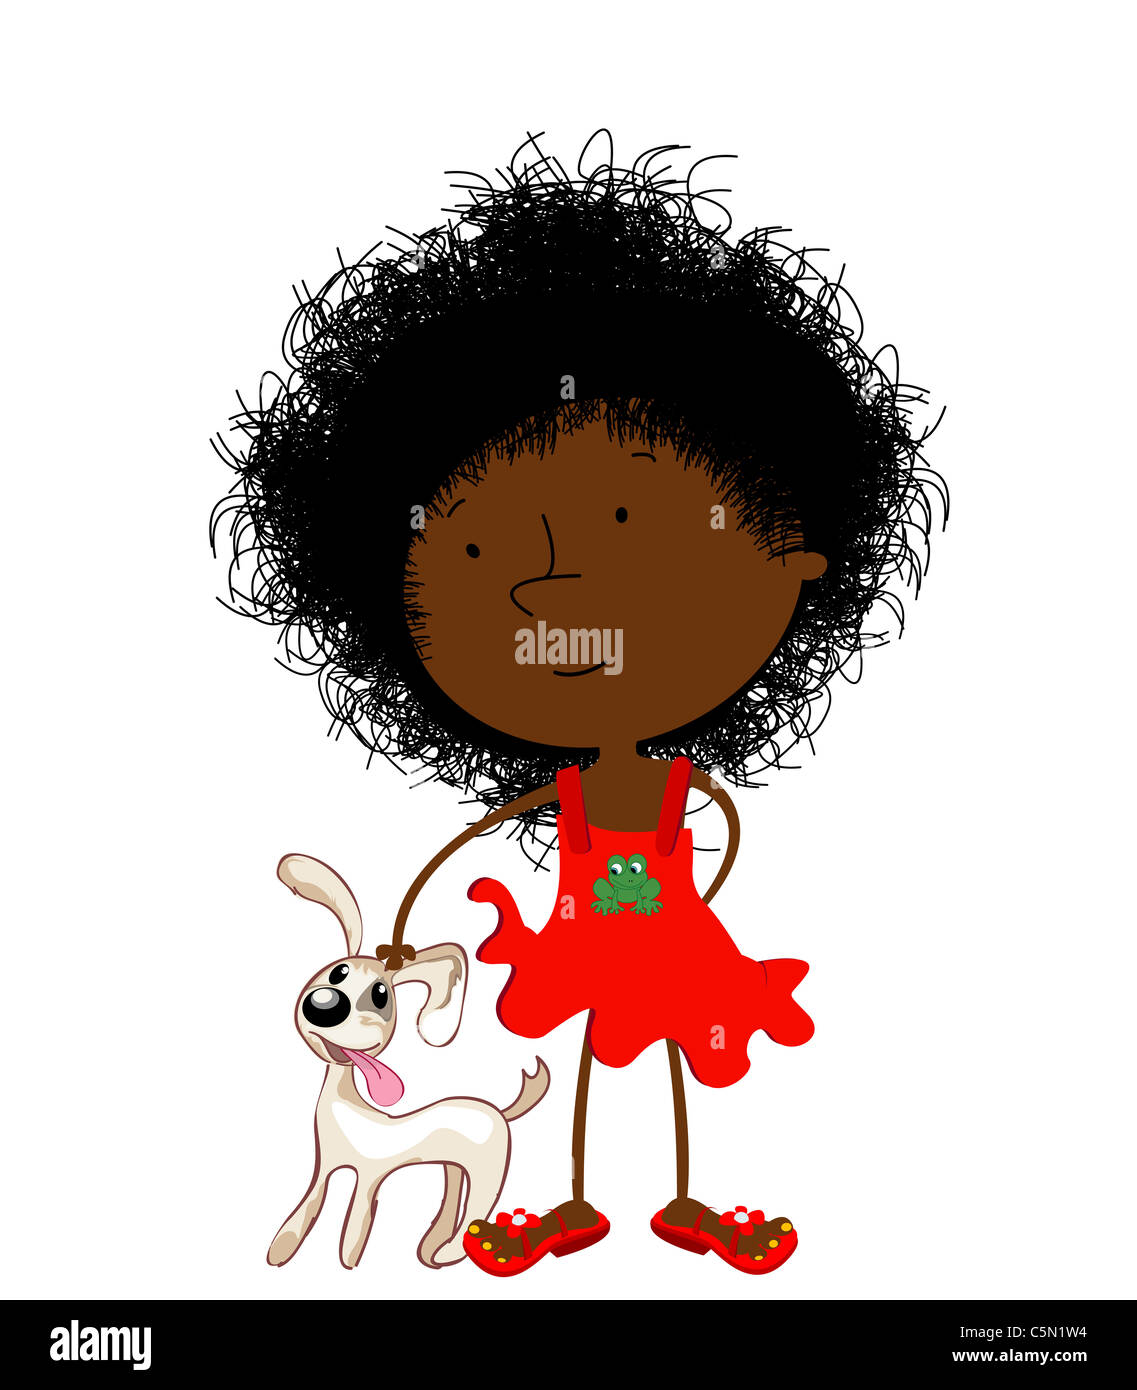 Black girl afro cartoon